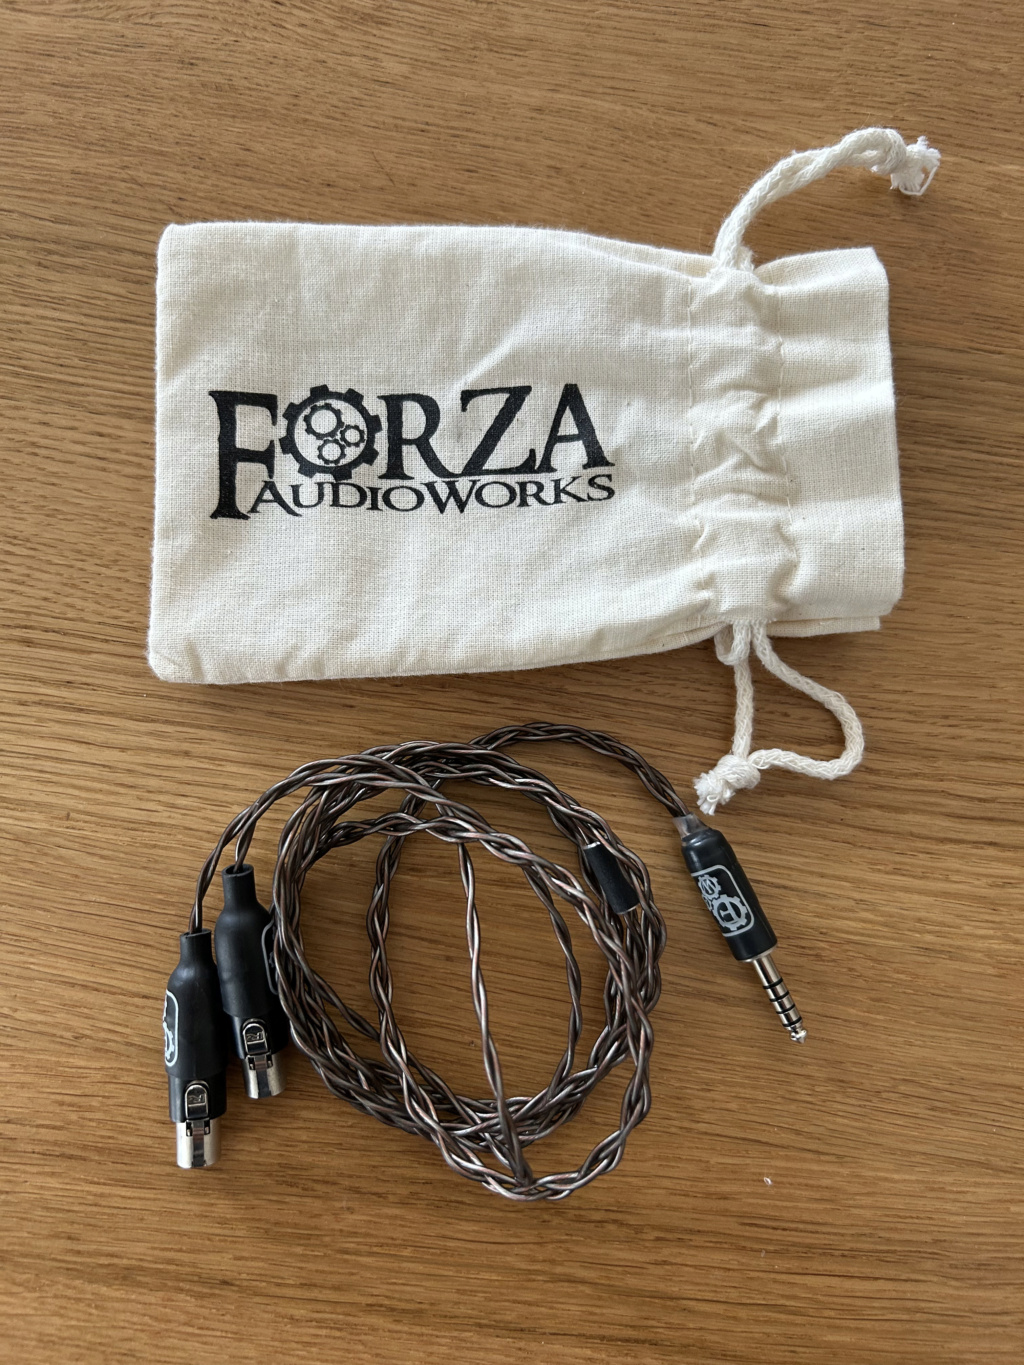 Cavi Forza Audioworks per cuffie Audeze/Kennerton/ZMF etc Img_4310